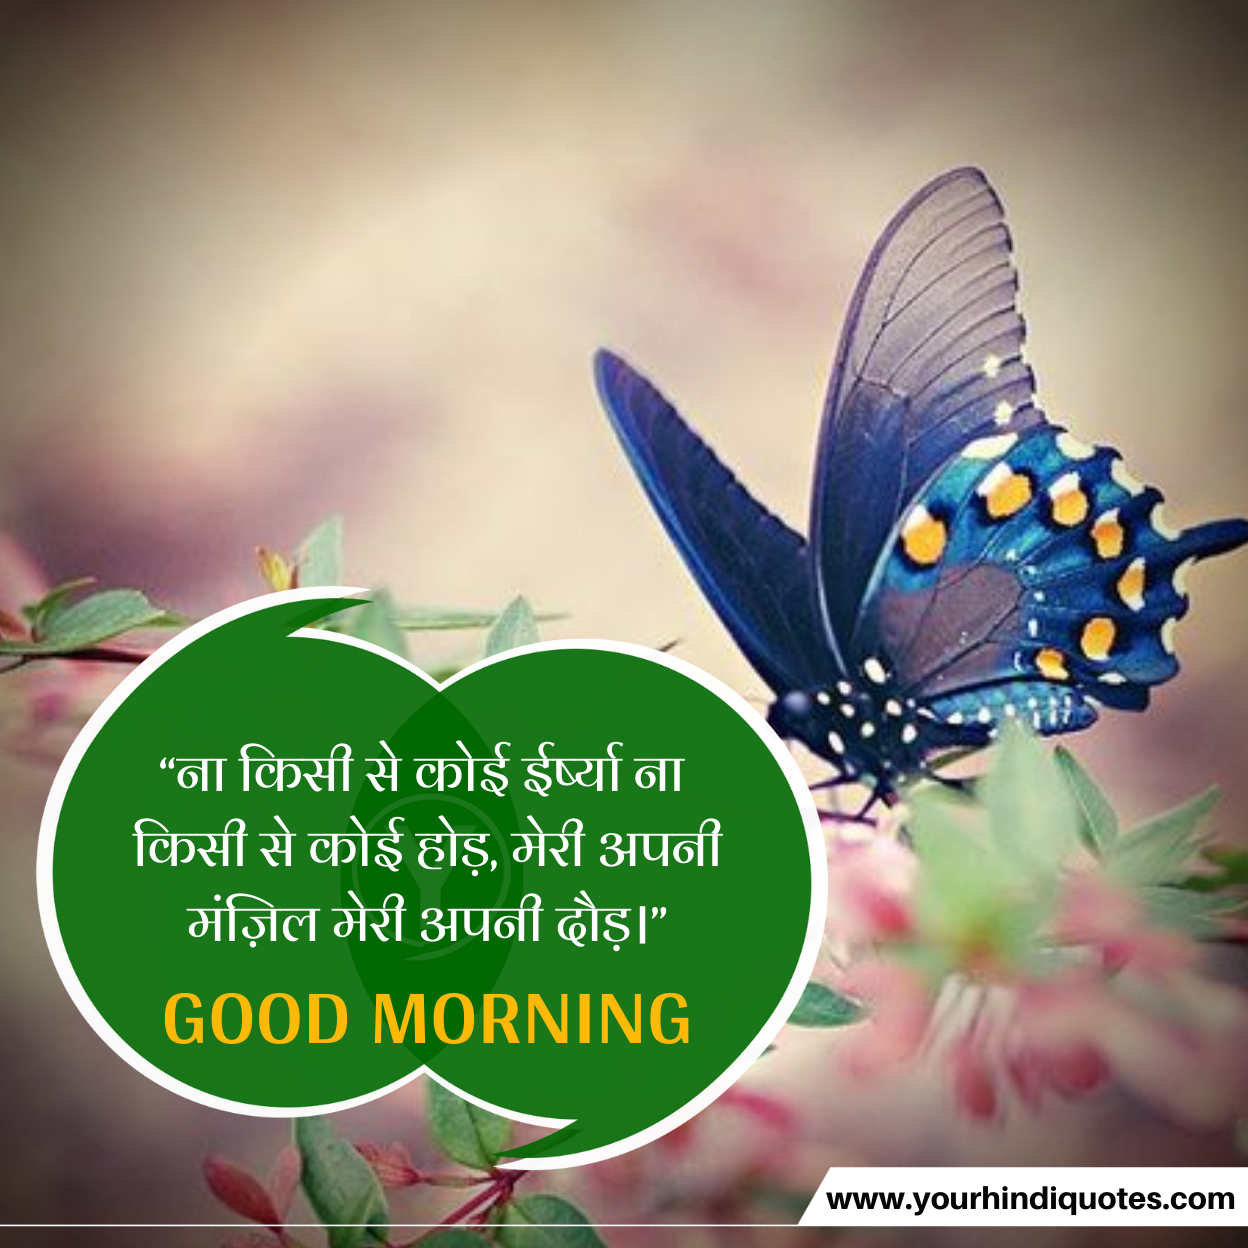 Best Hindi Morning Images